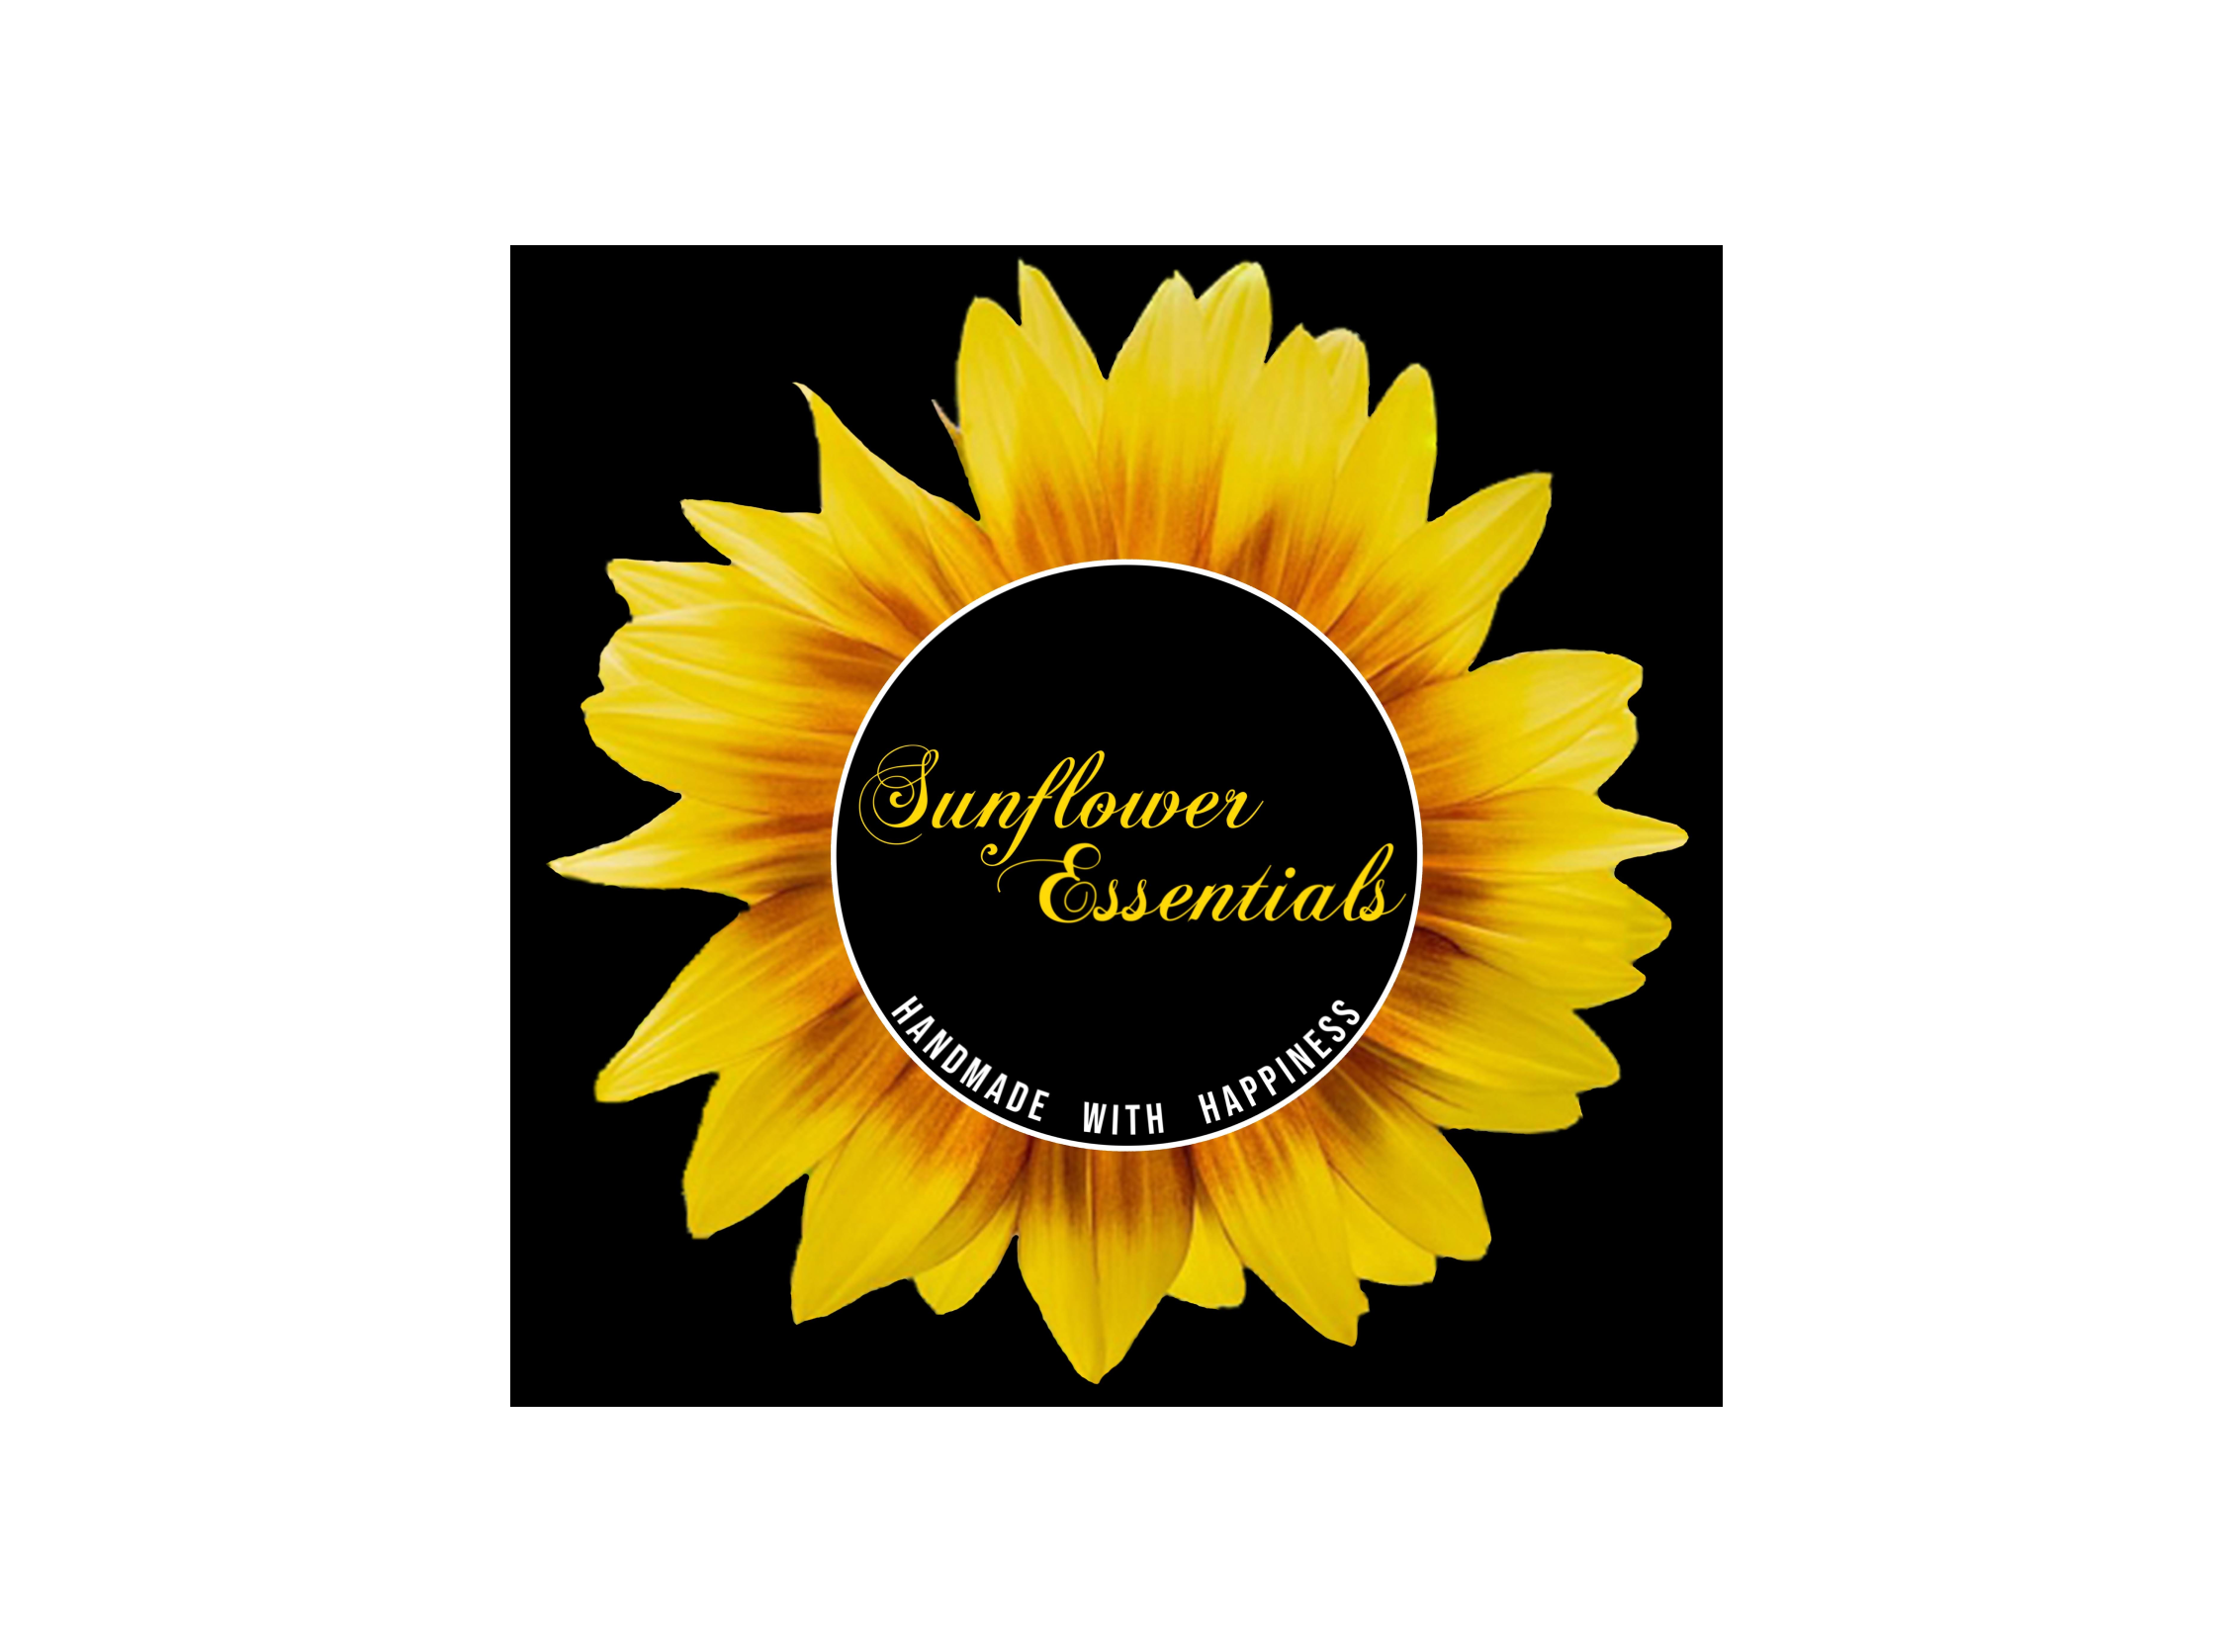 Handmade With Happiness - Sunflower Essentials